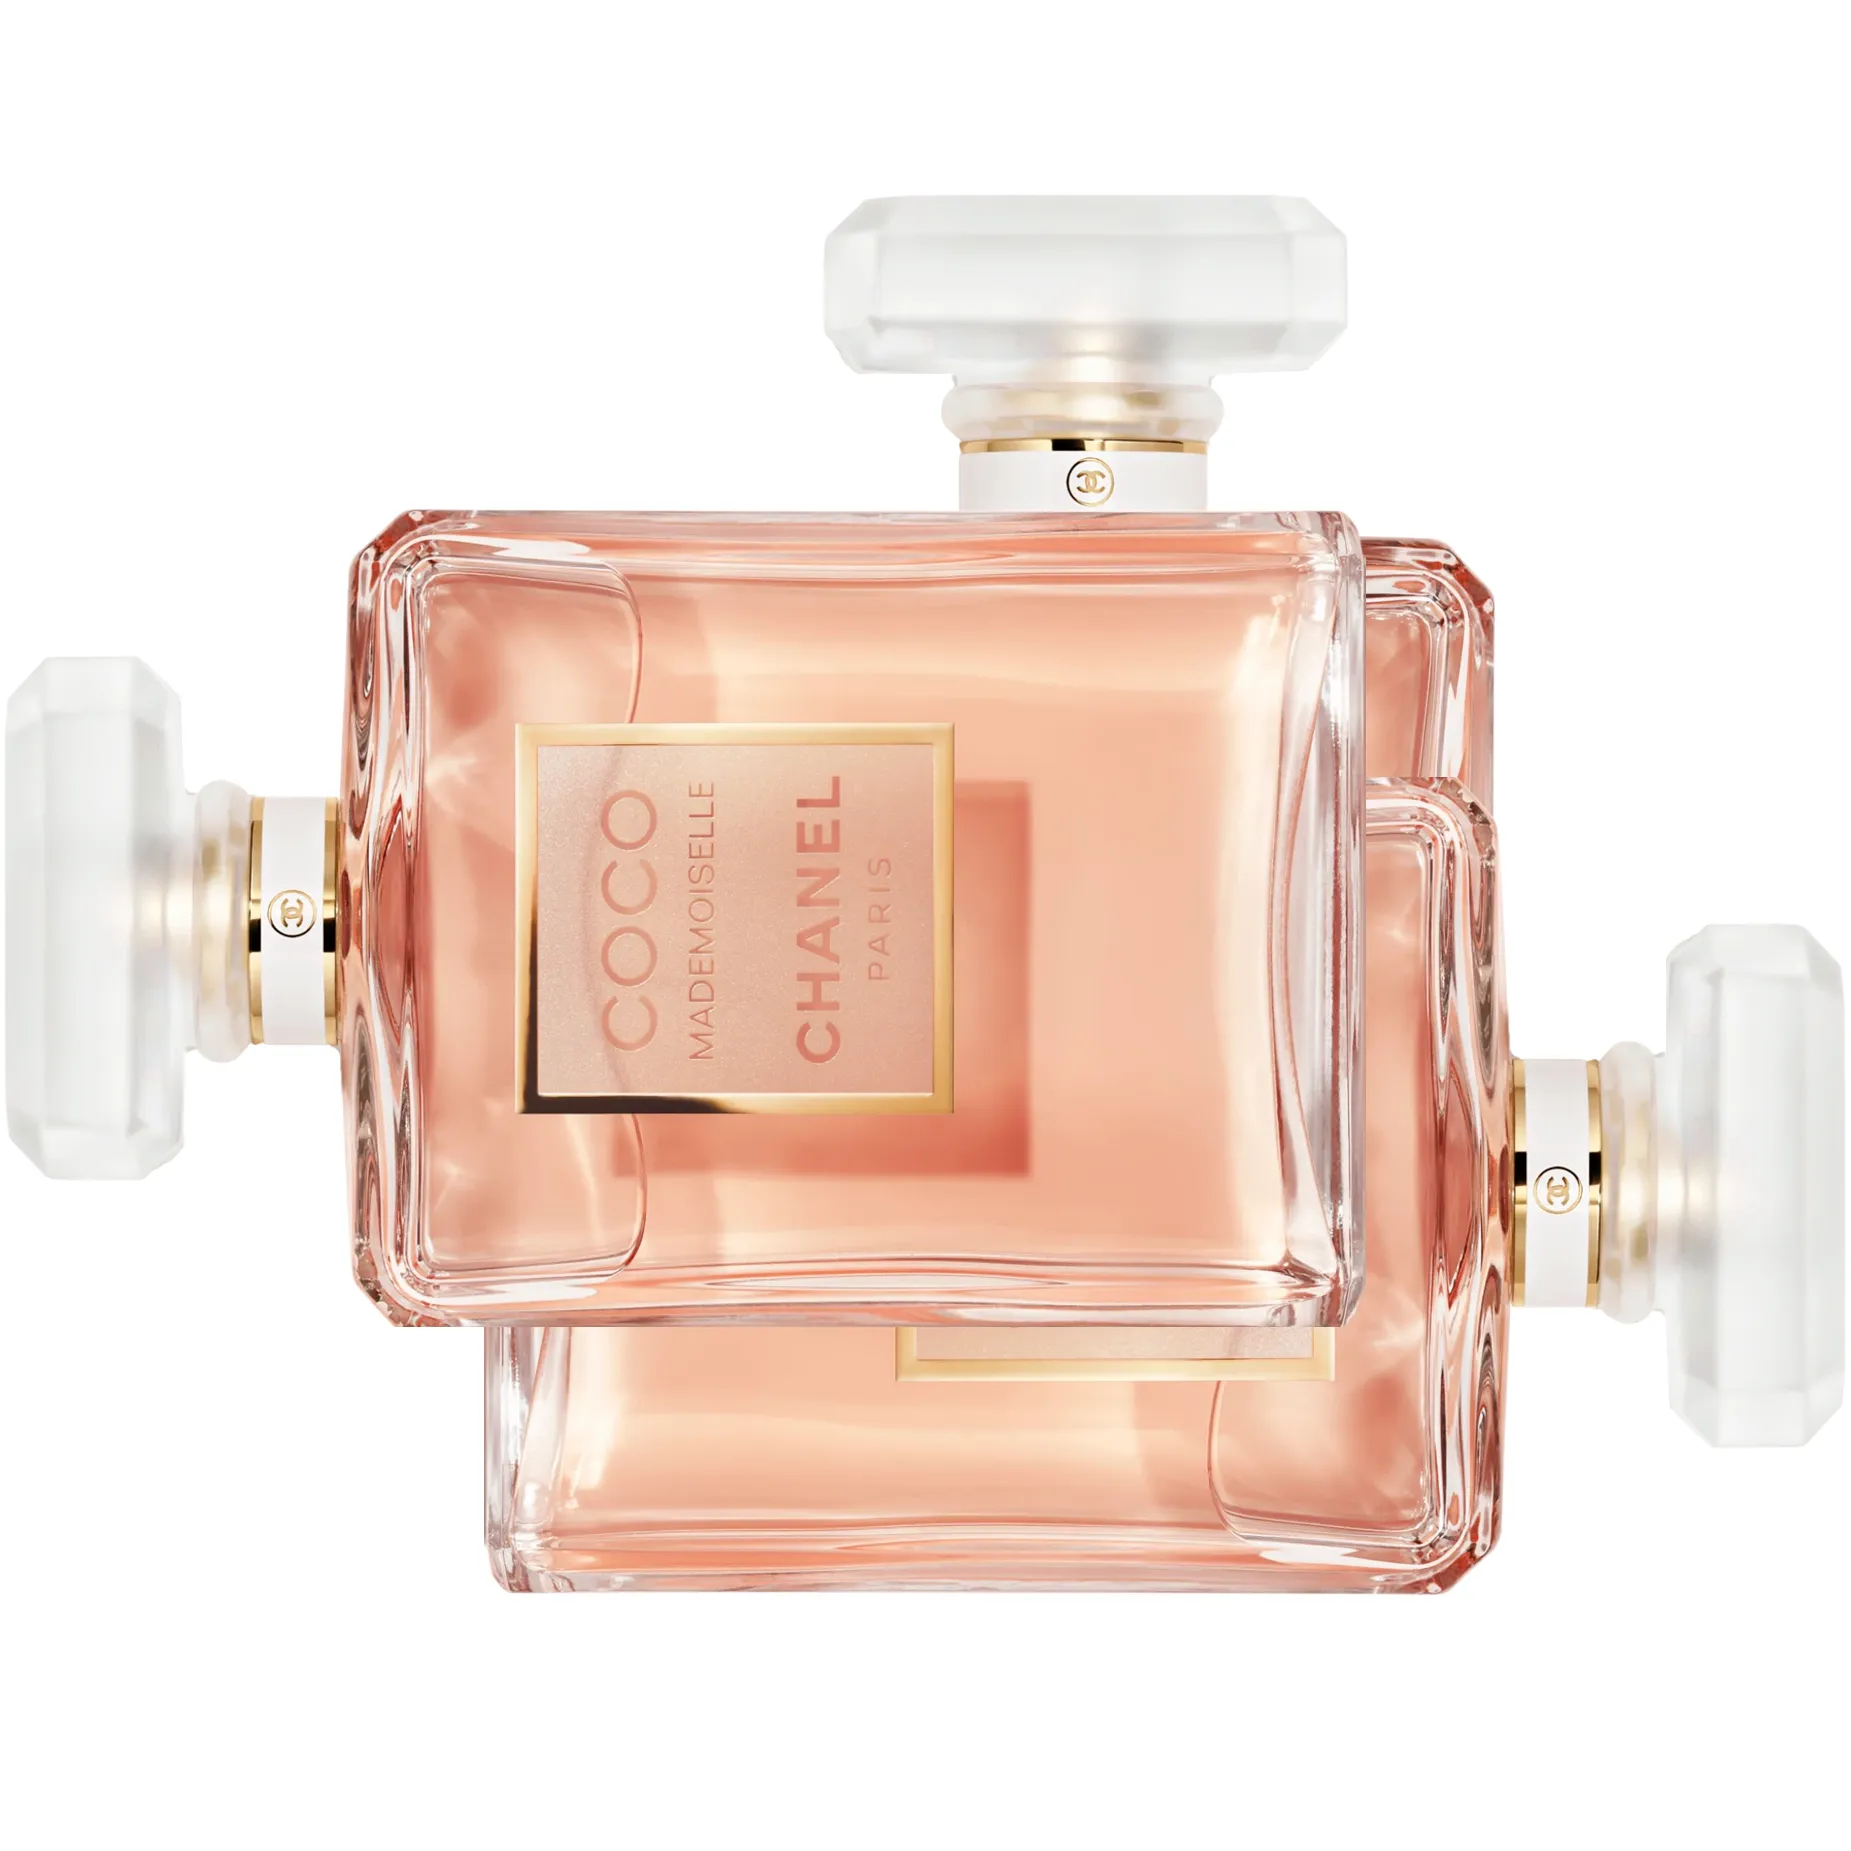 Free Coco Chanel Perfume For Winners